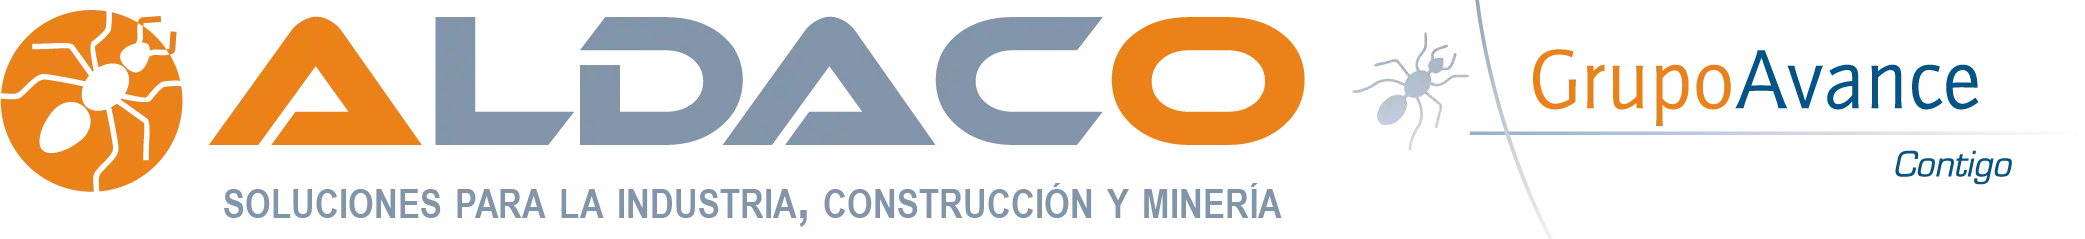 Logo Aldaco GrupoAvance